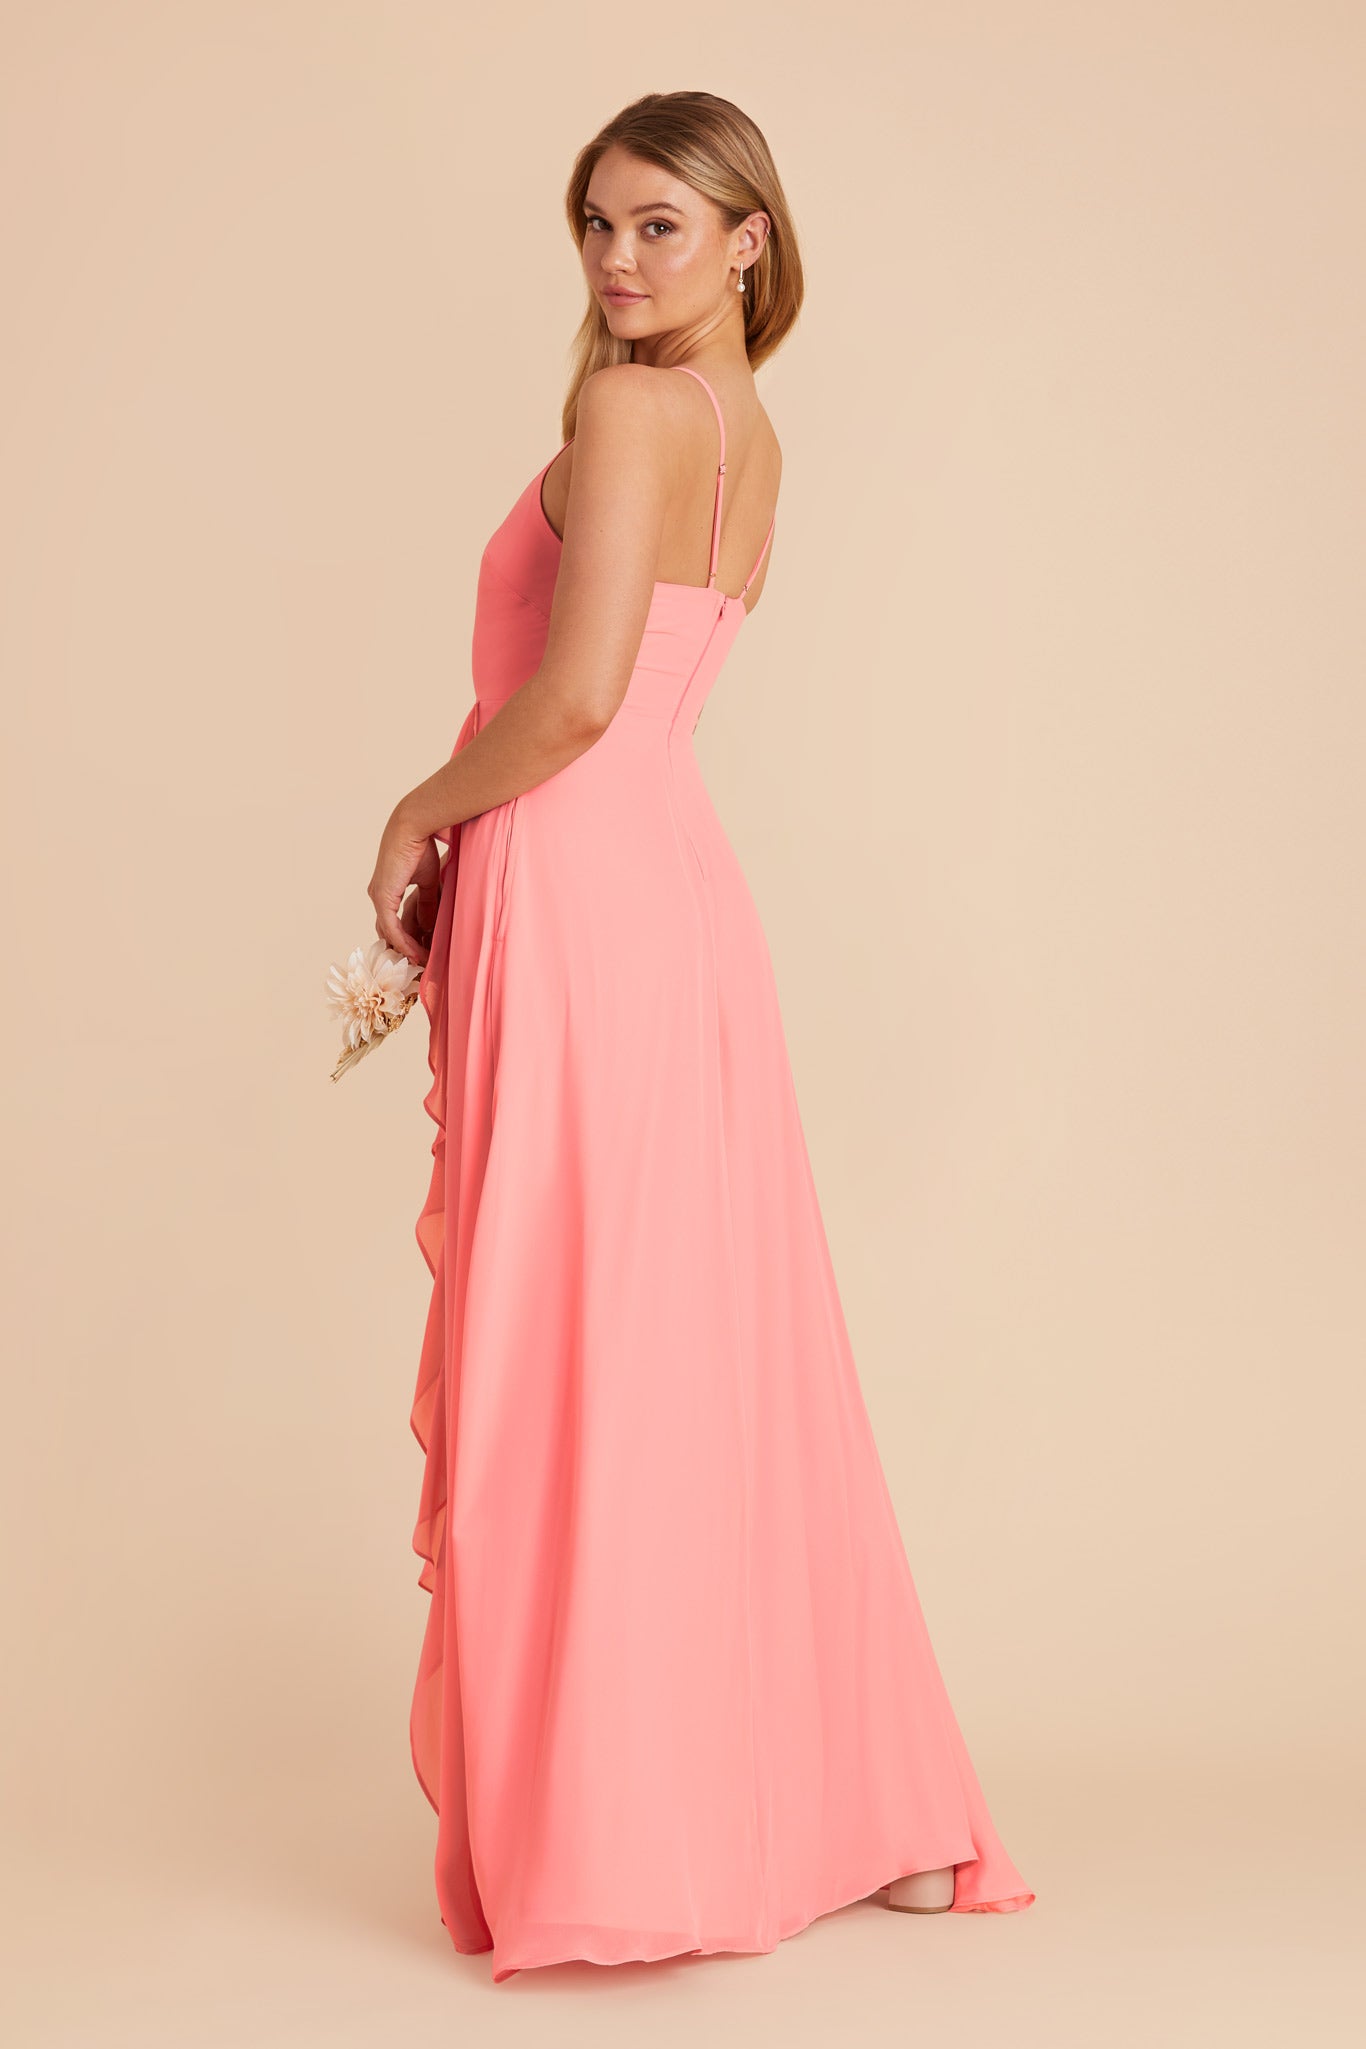 Coral Pink Theresa Chiffon Dress by Birdy Grey